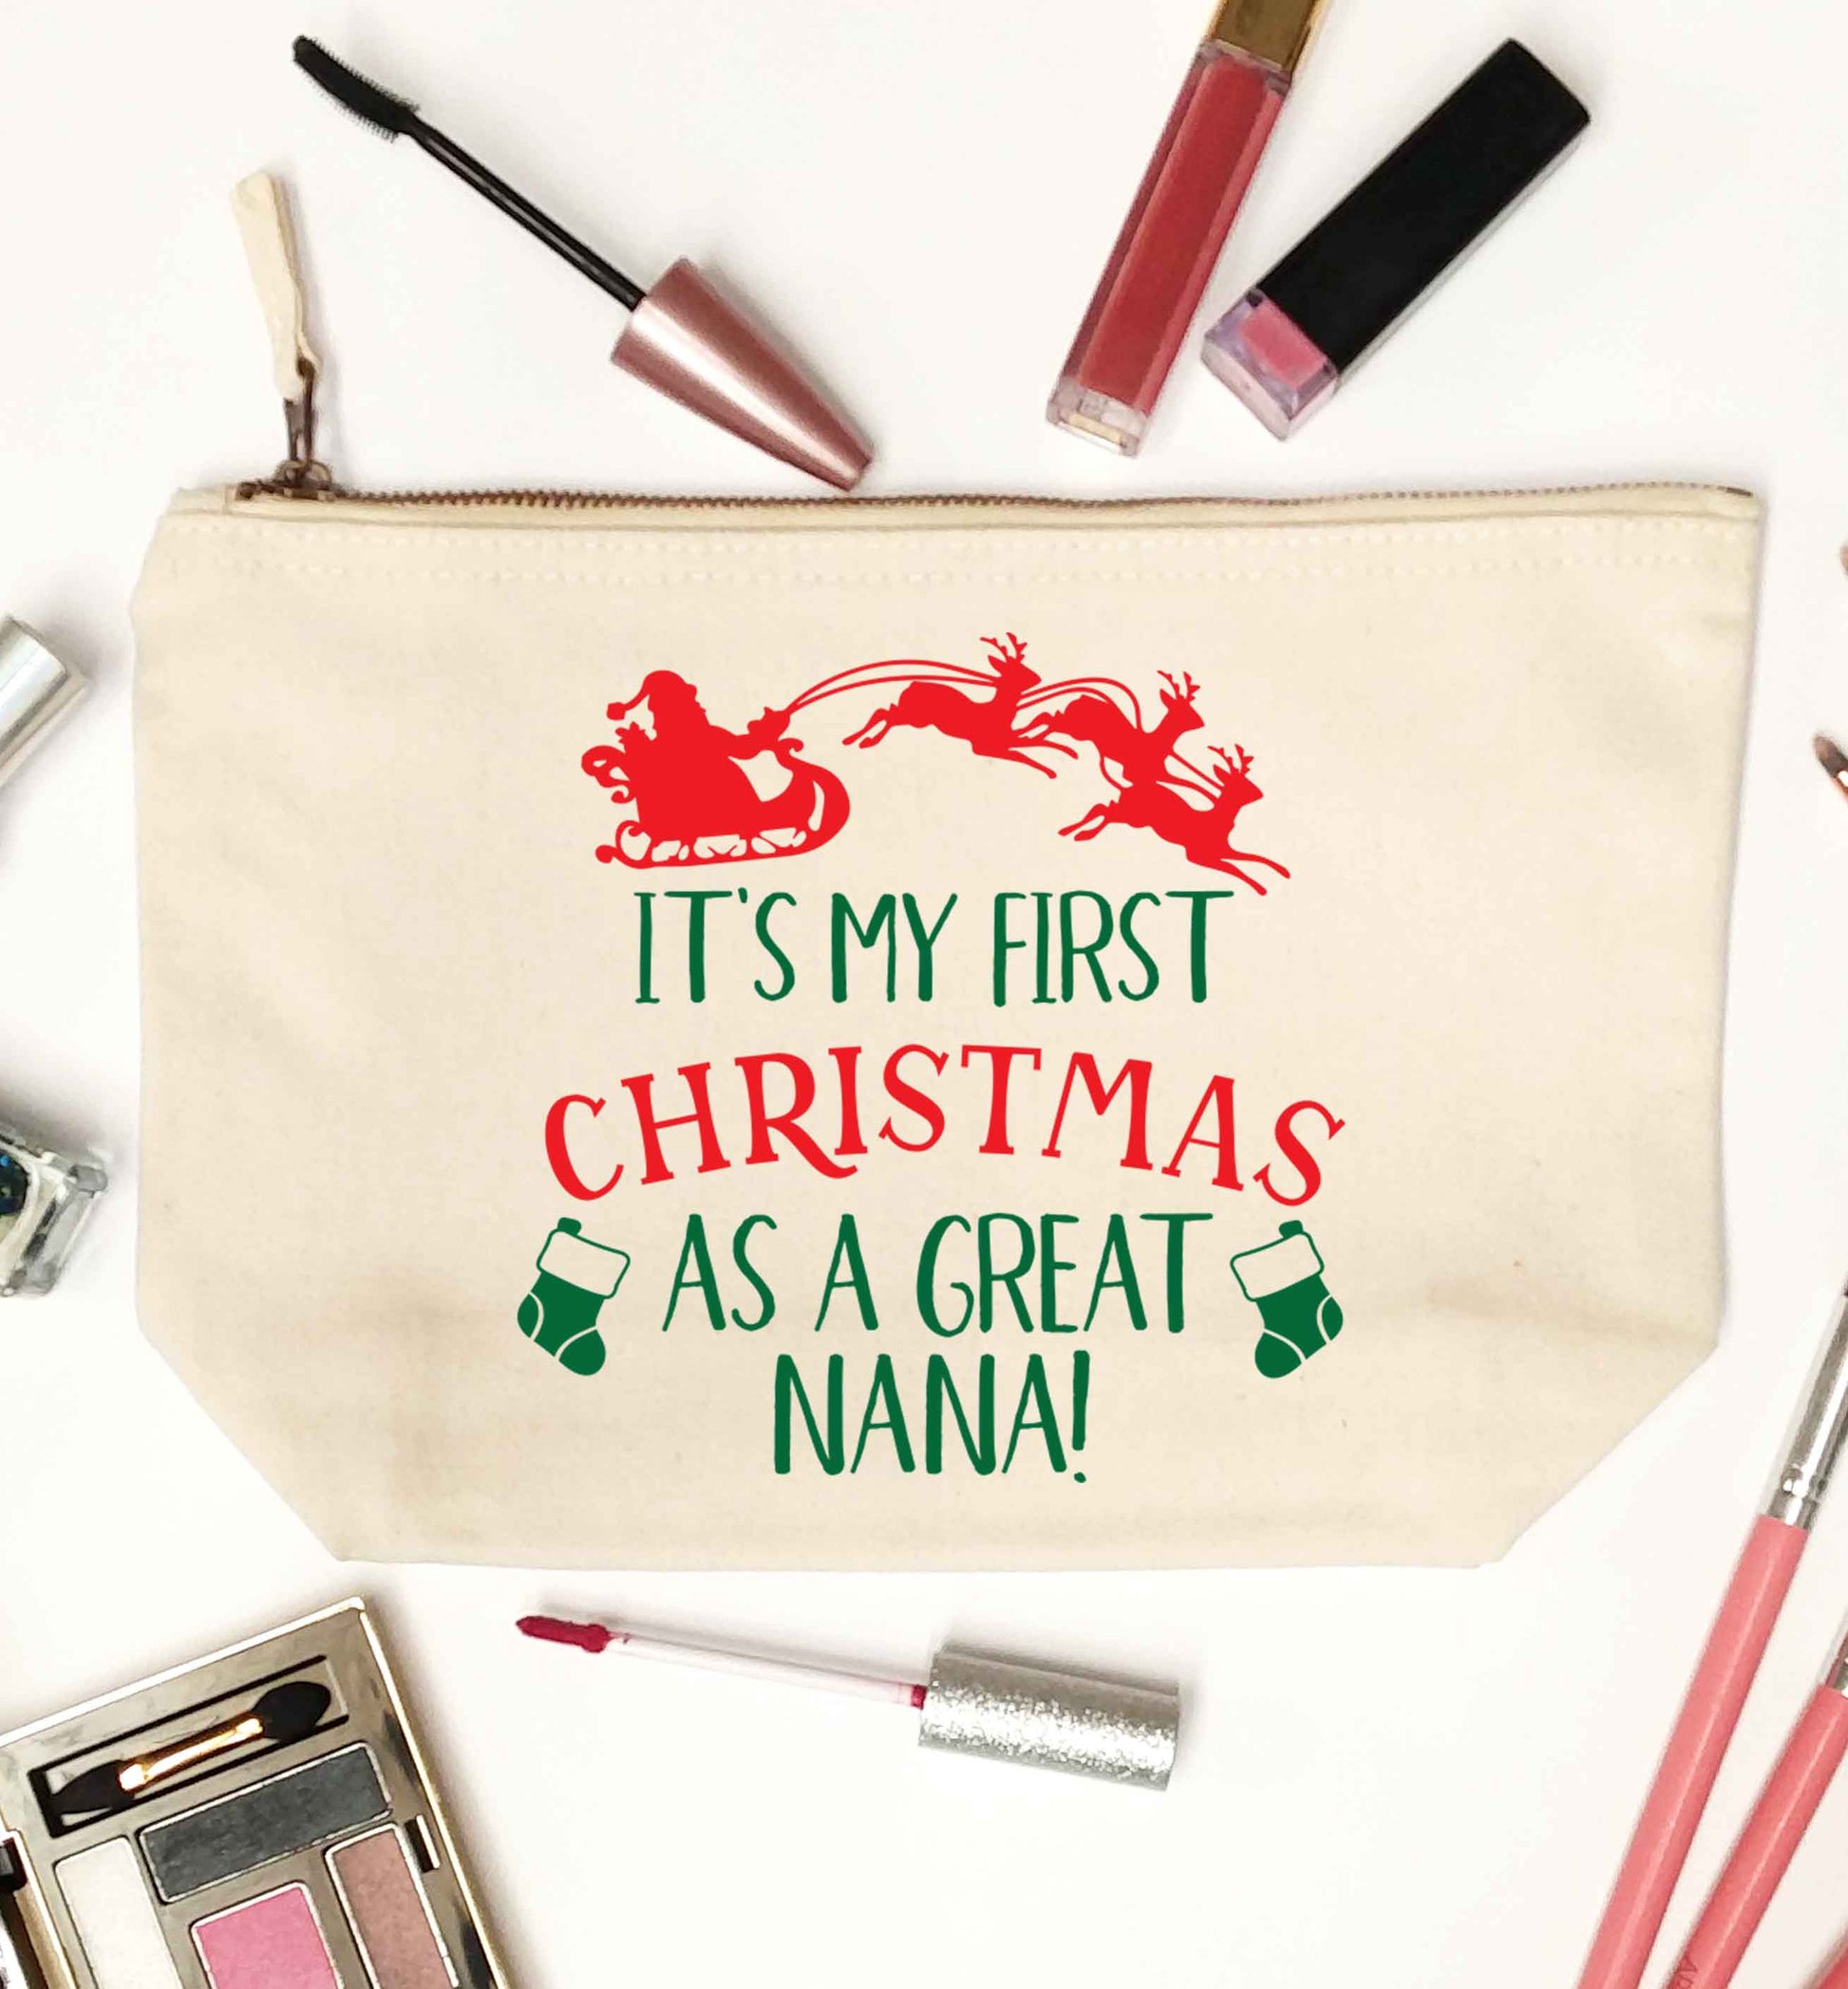 It's my first Christmas as a great nana! natural makeup bag